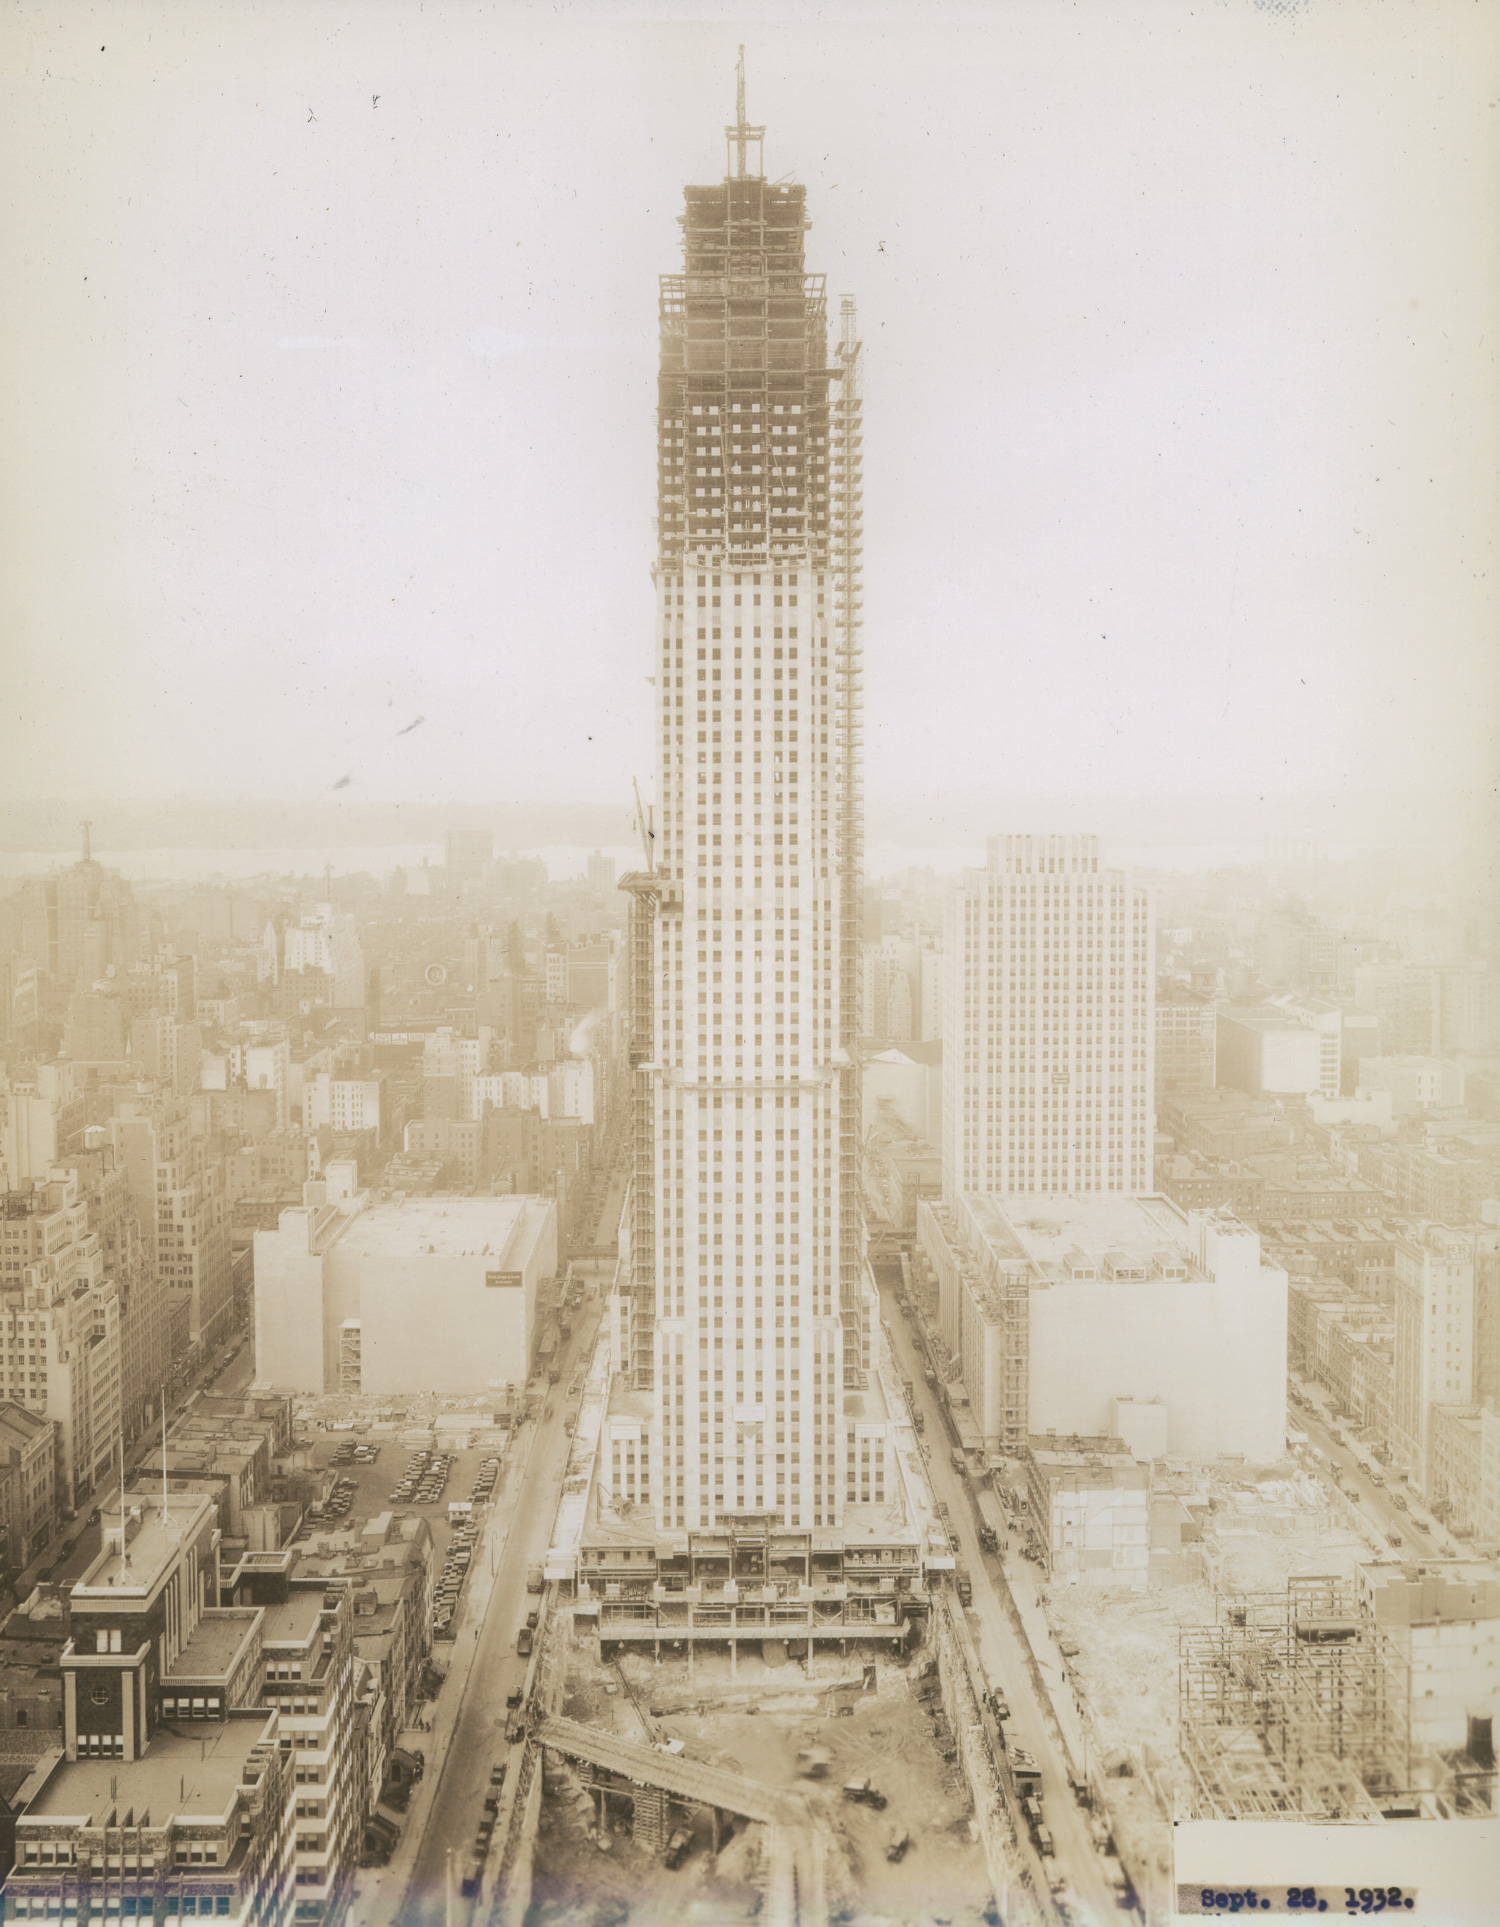 Construction of Rockefeller Center, 1932